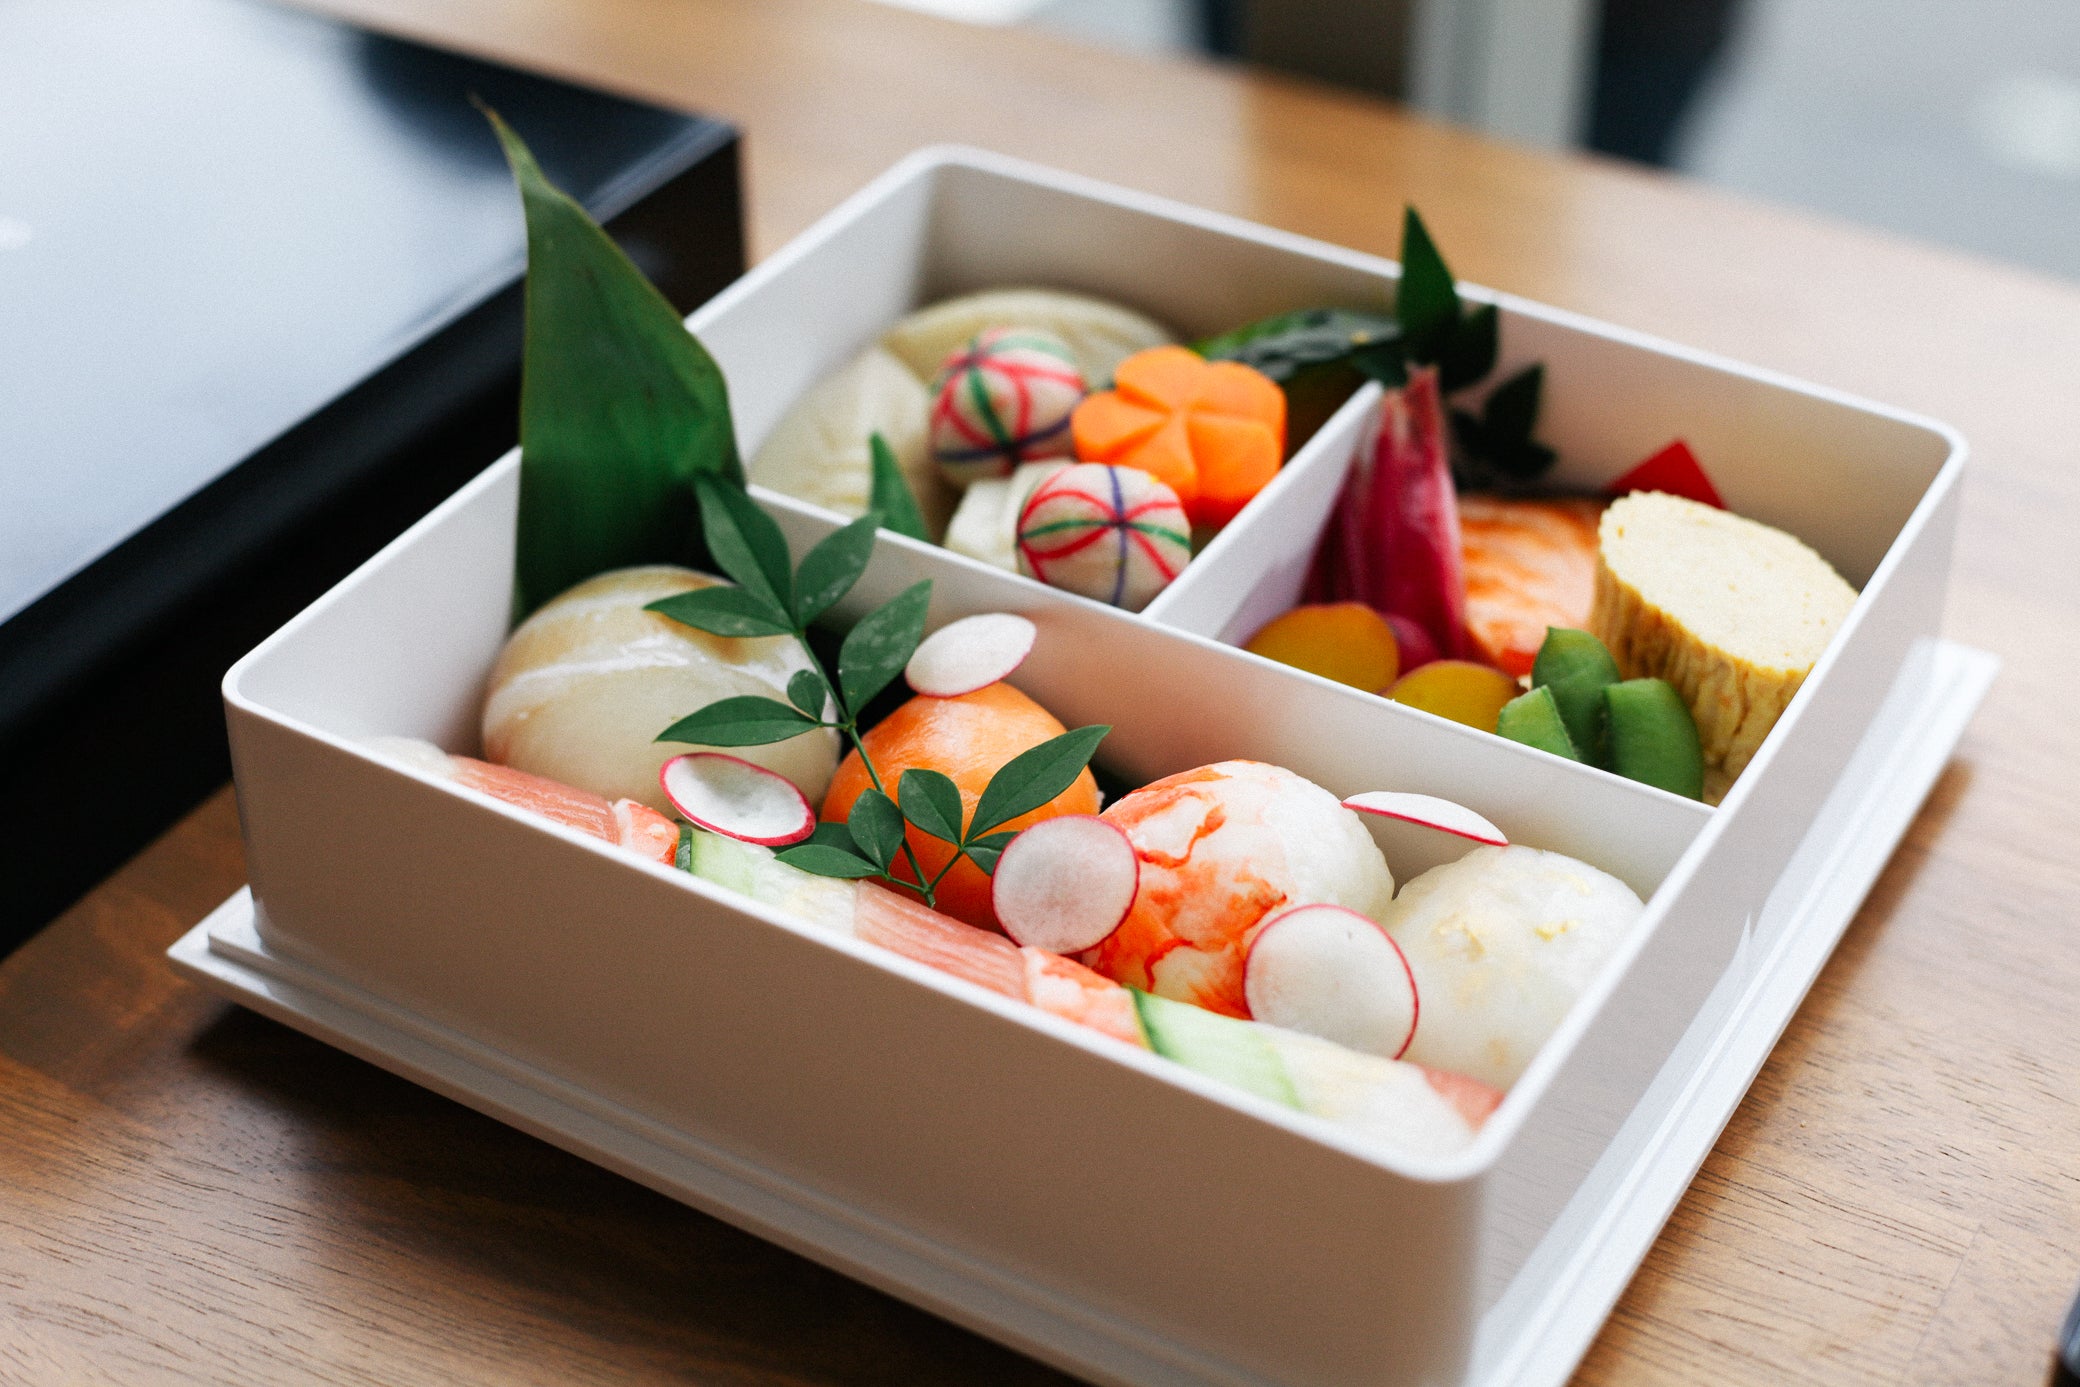 Japanese bento box shop  Stylish & traditional lunch boxes